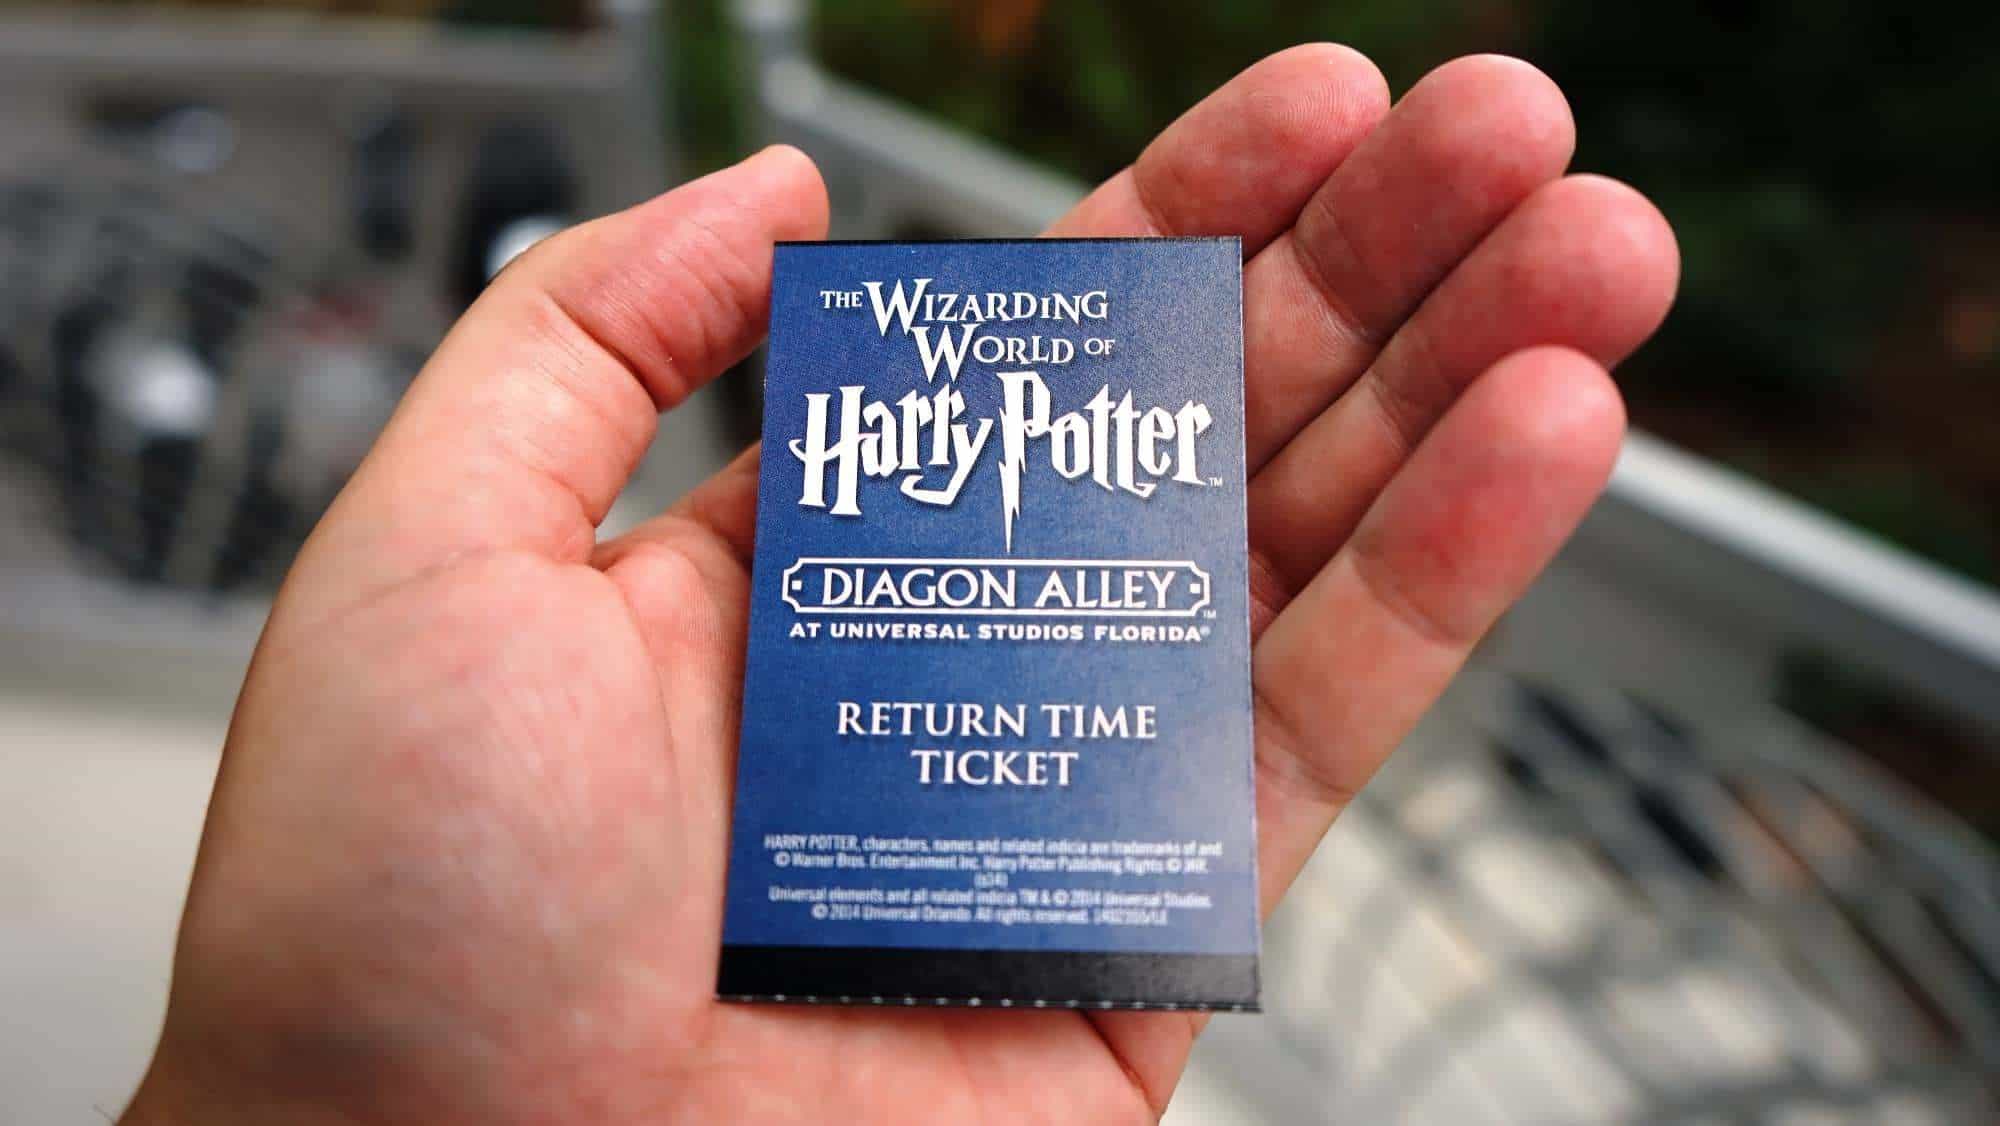 Harry Potter - Return Time Ticket (Utilizado durante abertura da área)